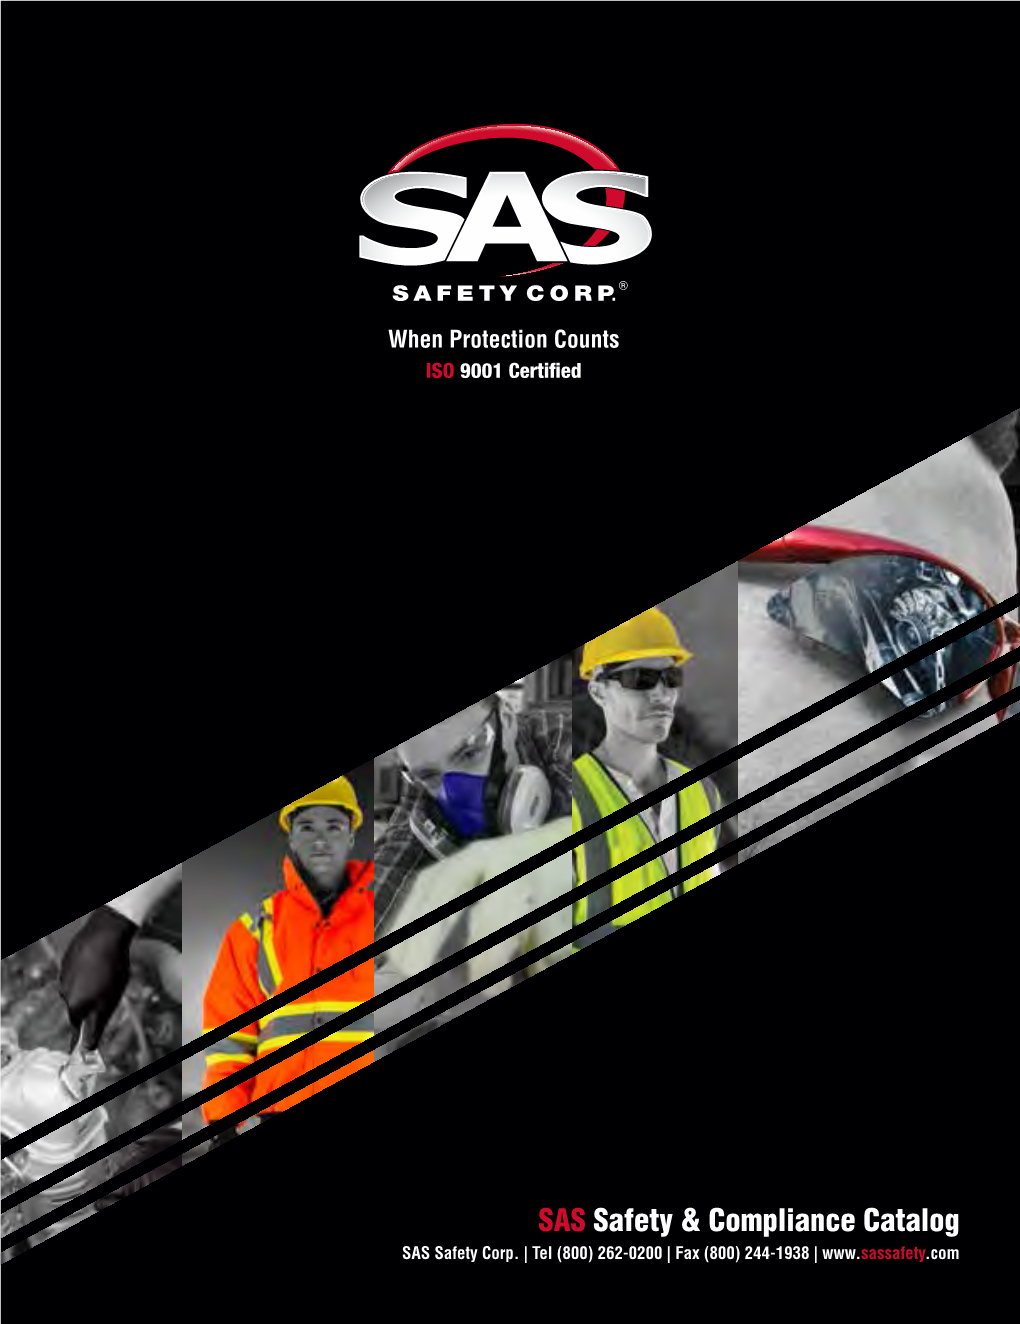 SAS Safety & Compliance Catalog